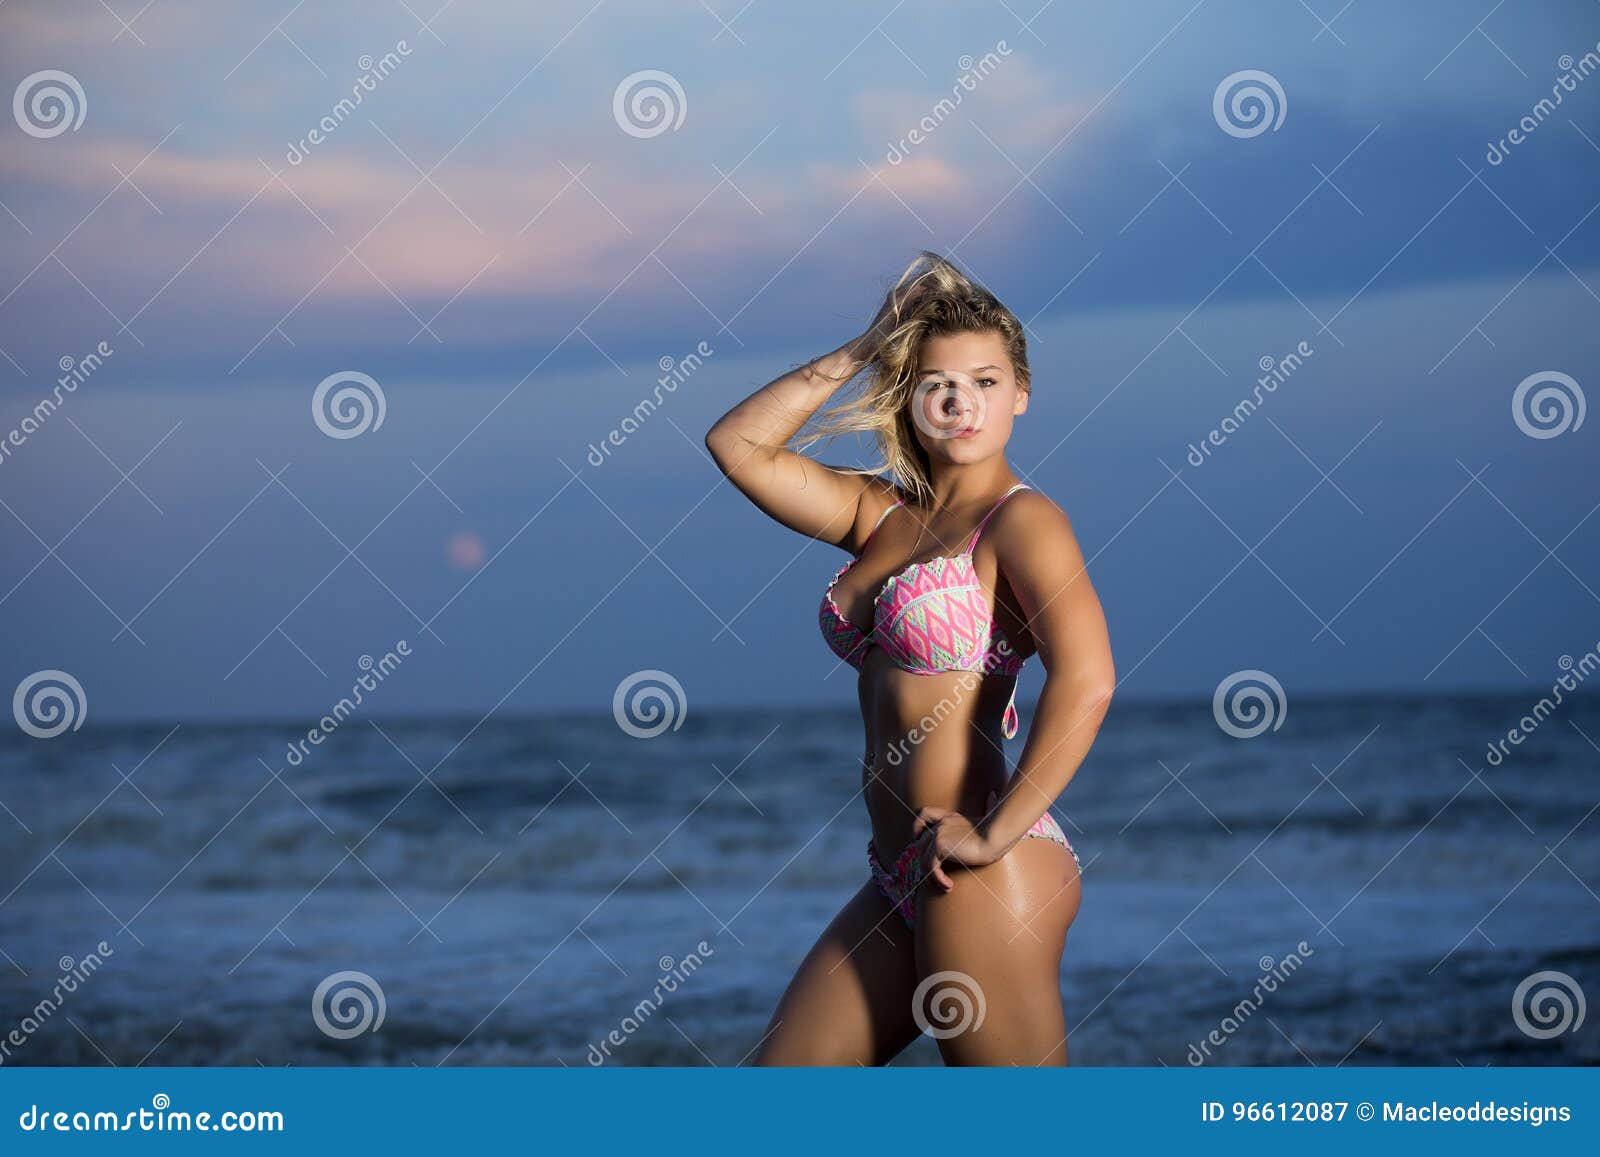 Girls busty beach Category:Topless women